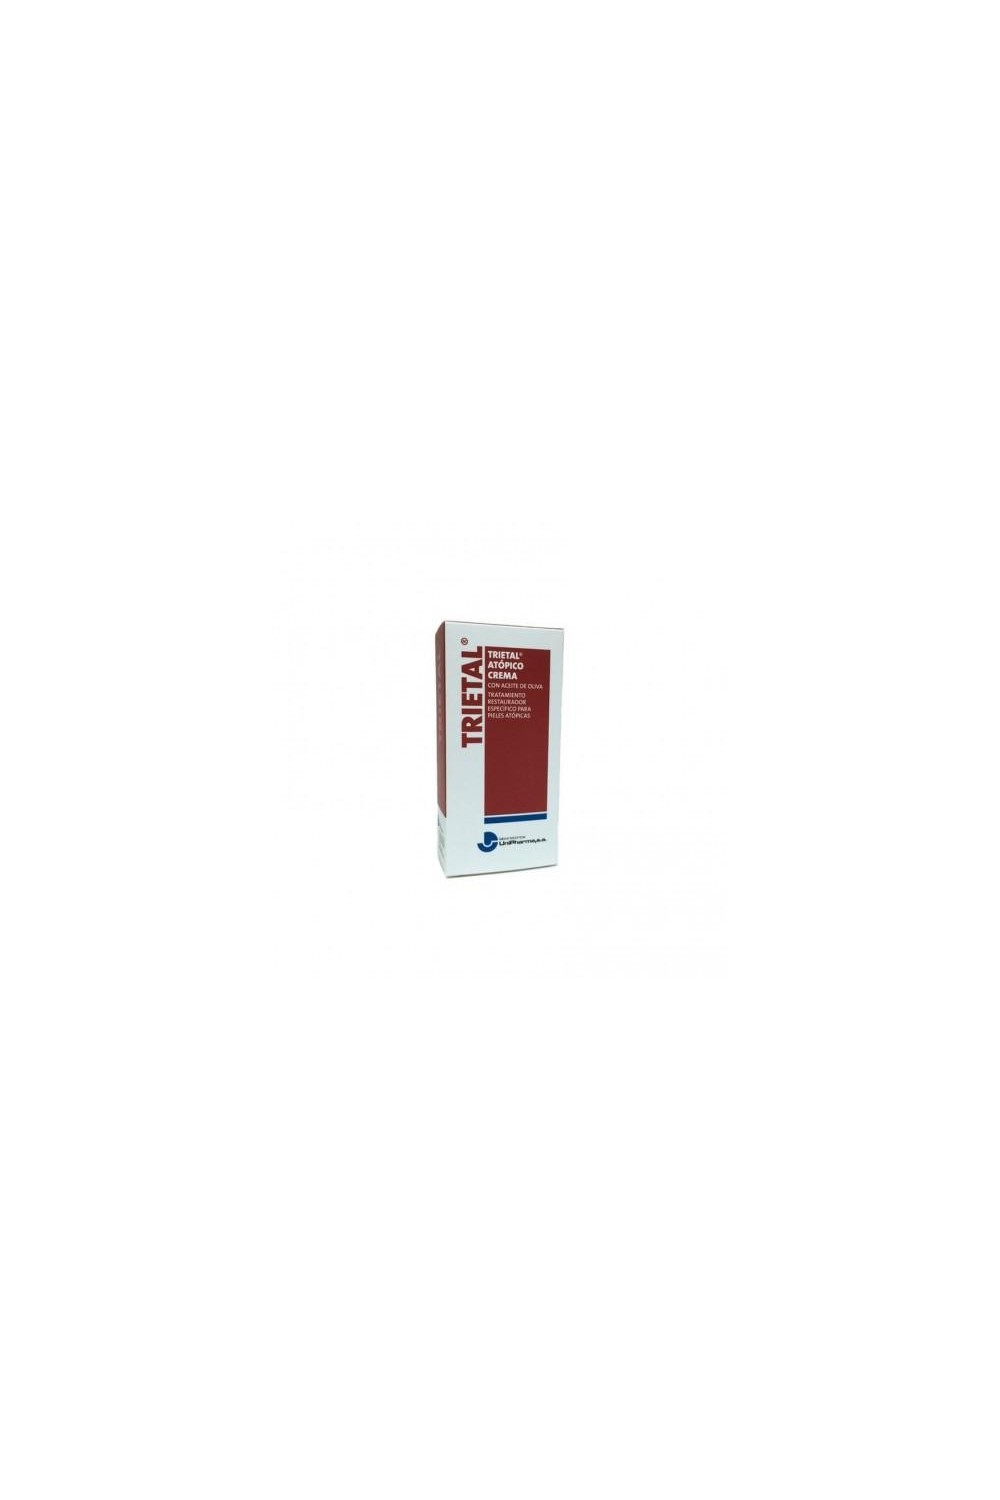 Unipharma Trietal™ Atopic Cream 200ml